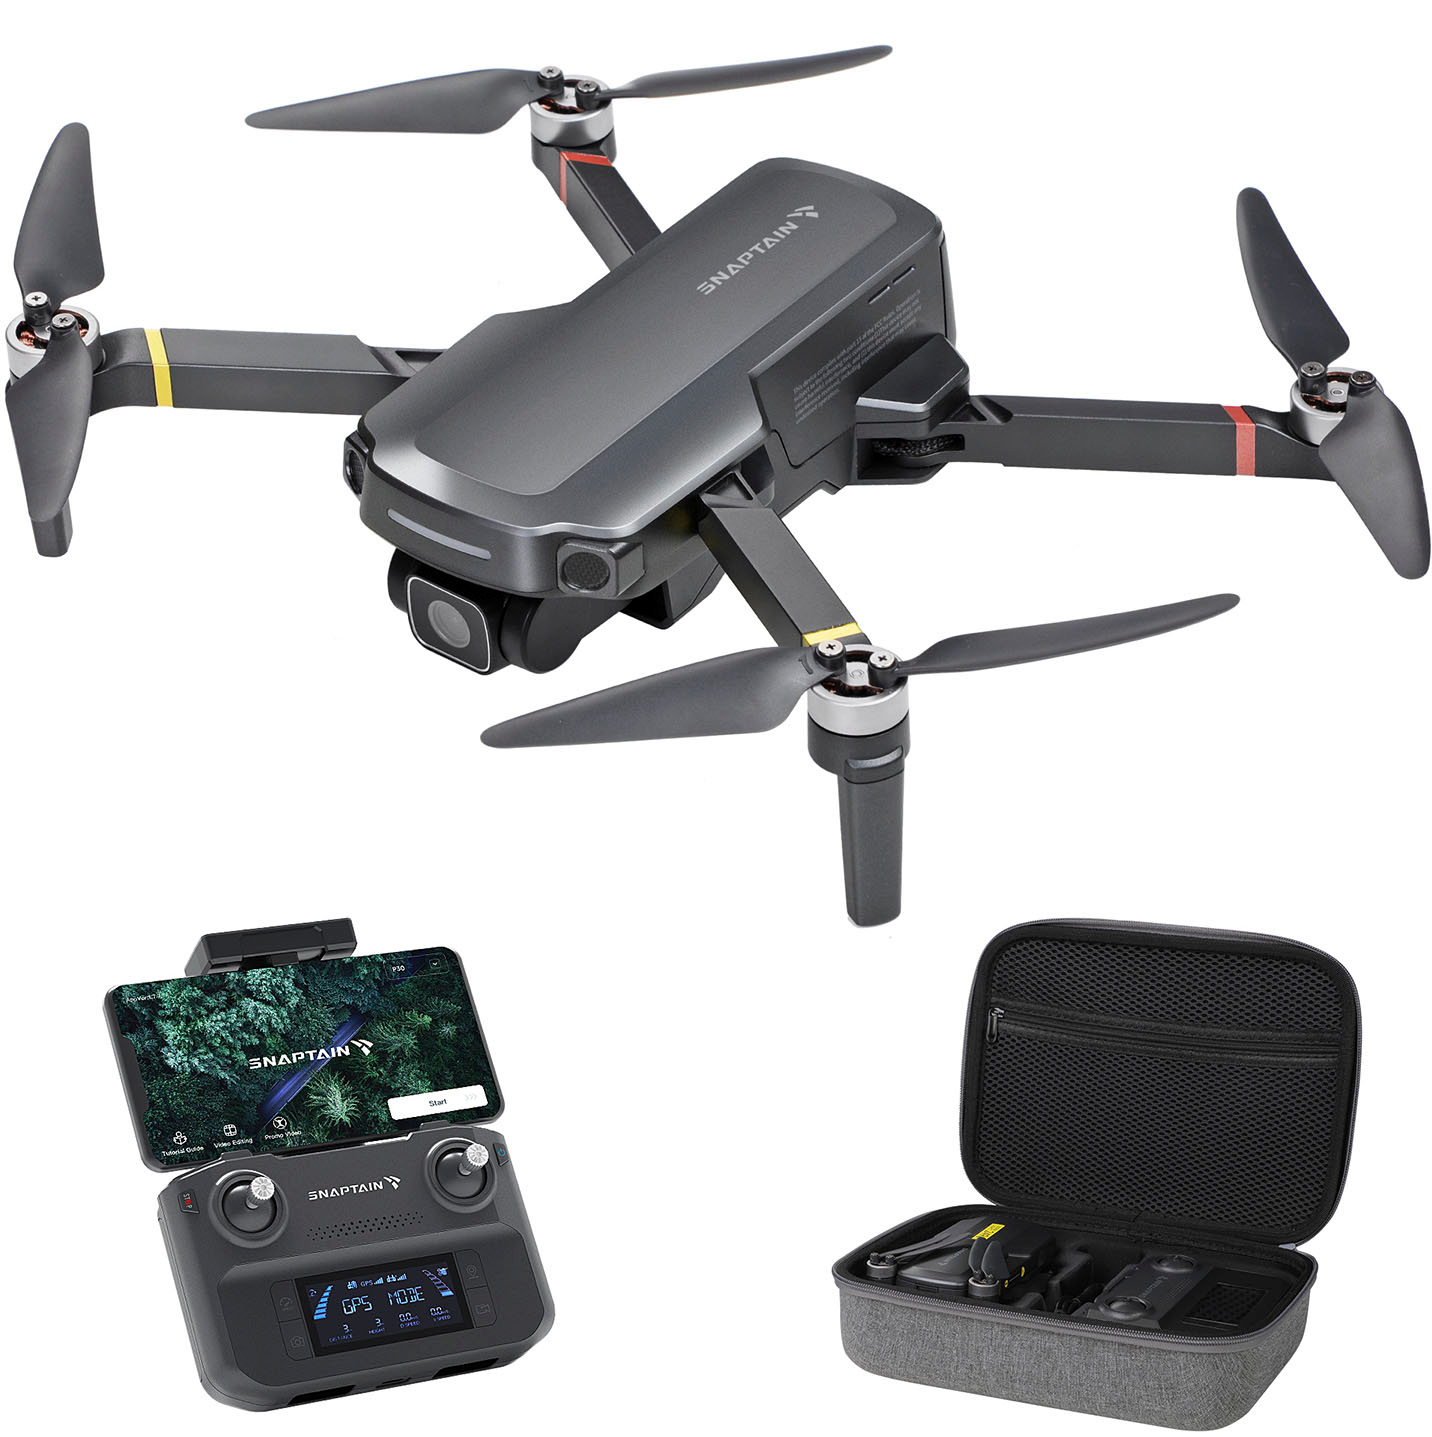 eksplodere tæerne læbe Vantop Snaptain P30 GPS Drone with Remote Controller Gray P30 - Best Buy